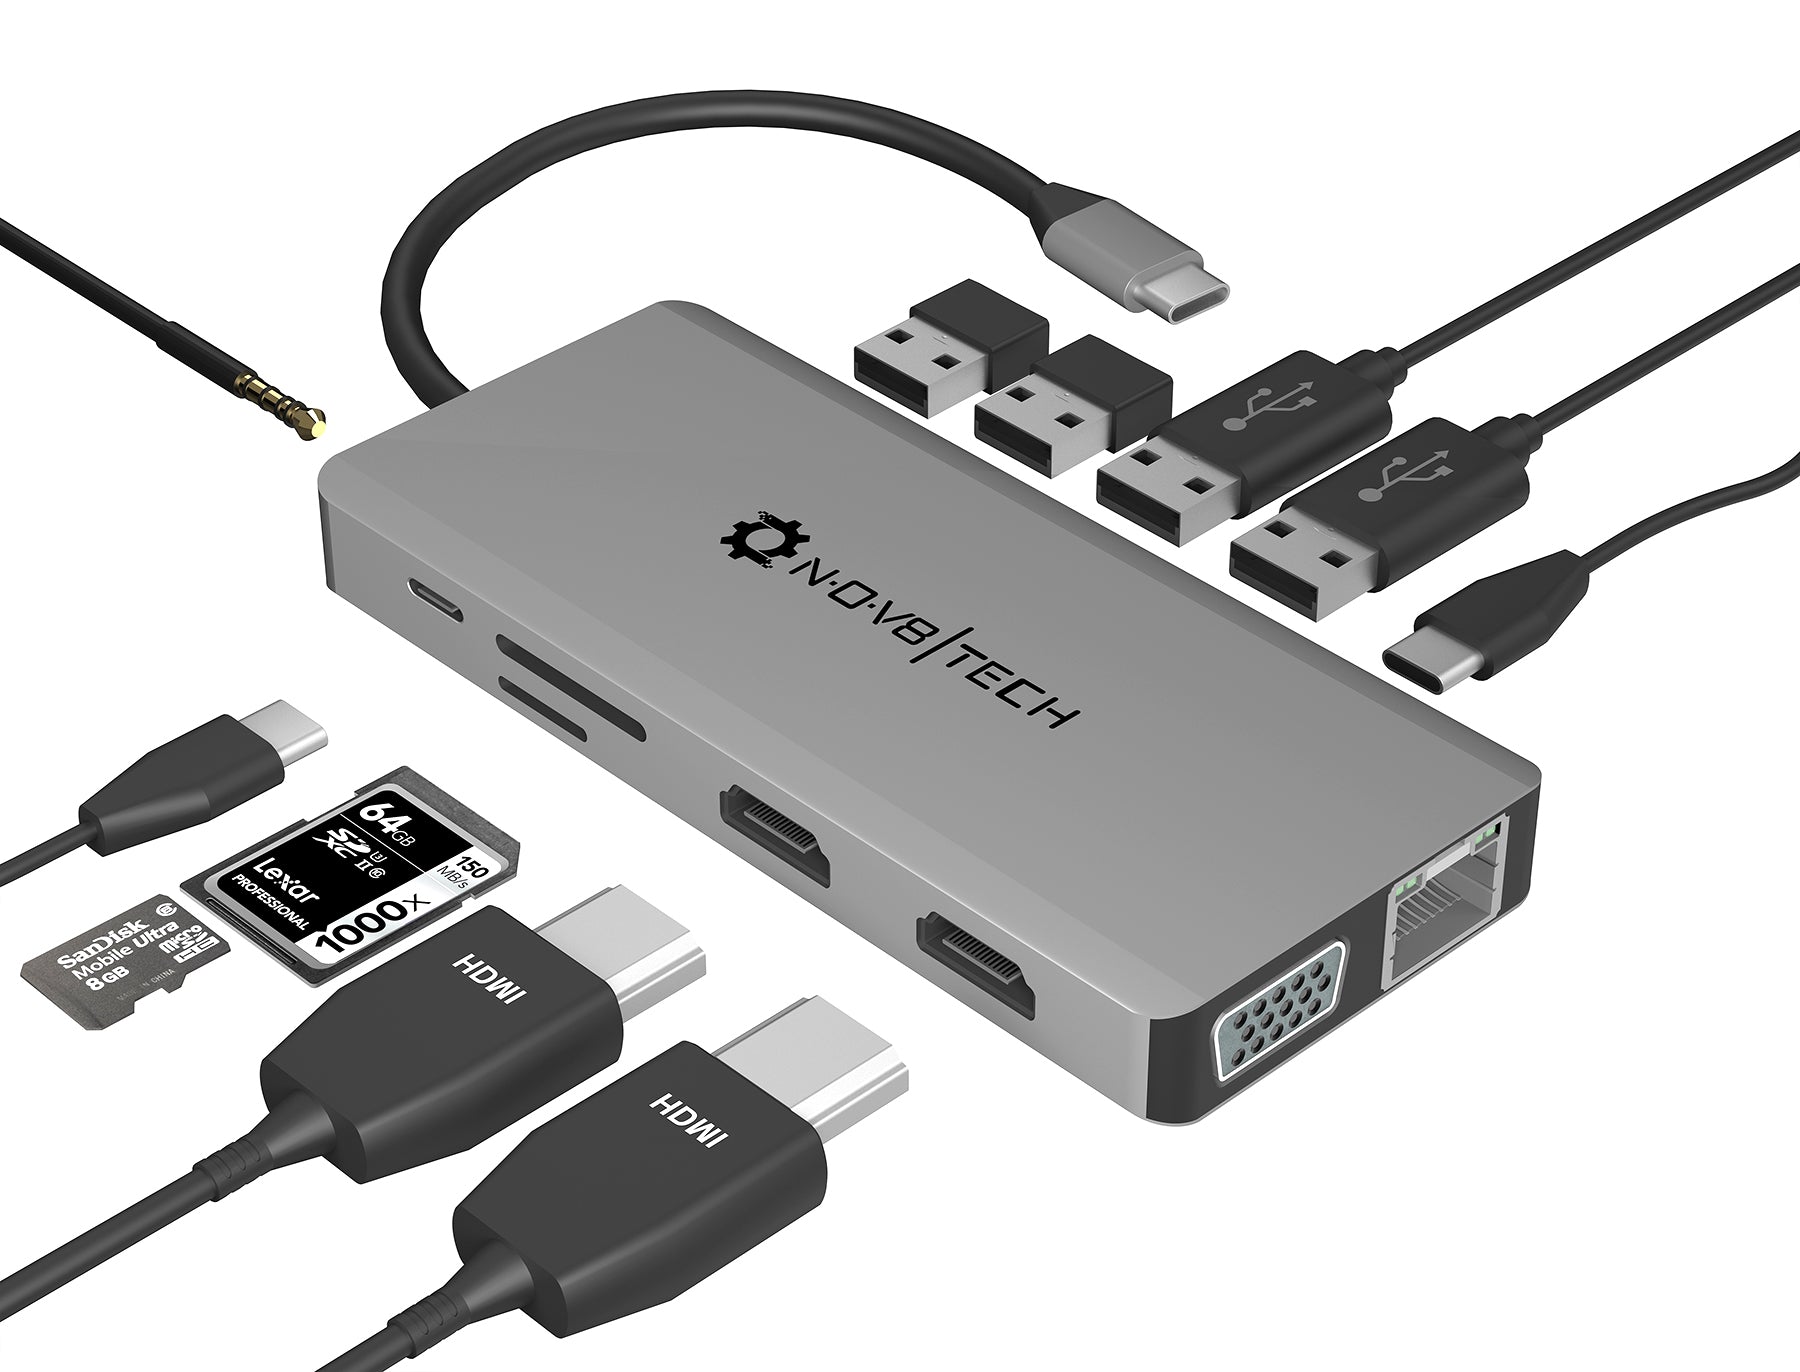 Anhoch PC Market Online - USB HUB 3.1 Type C to HDMI 4K, USB 3.0x3